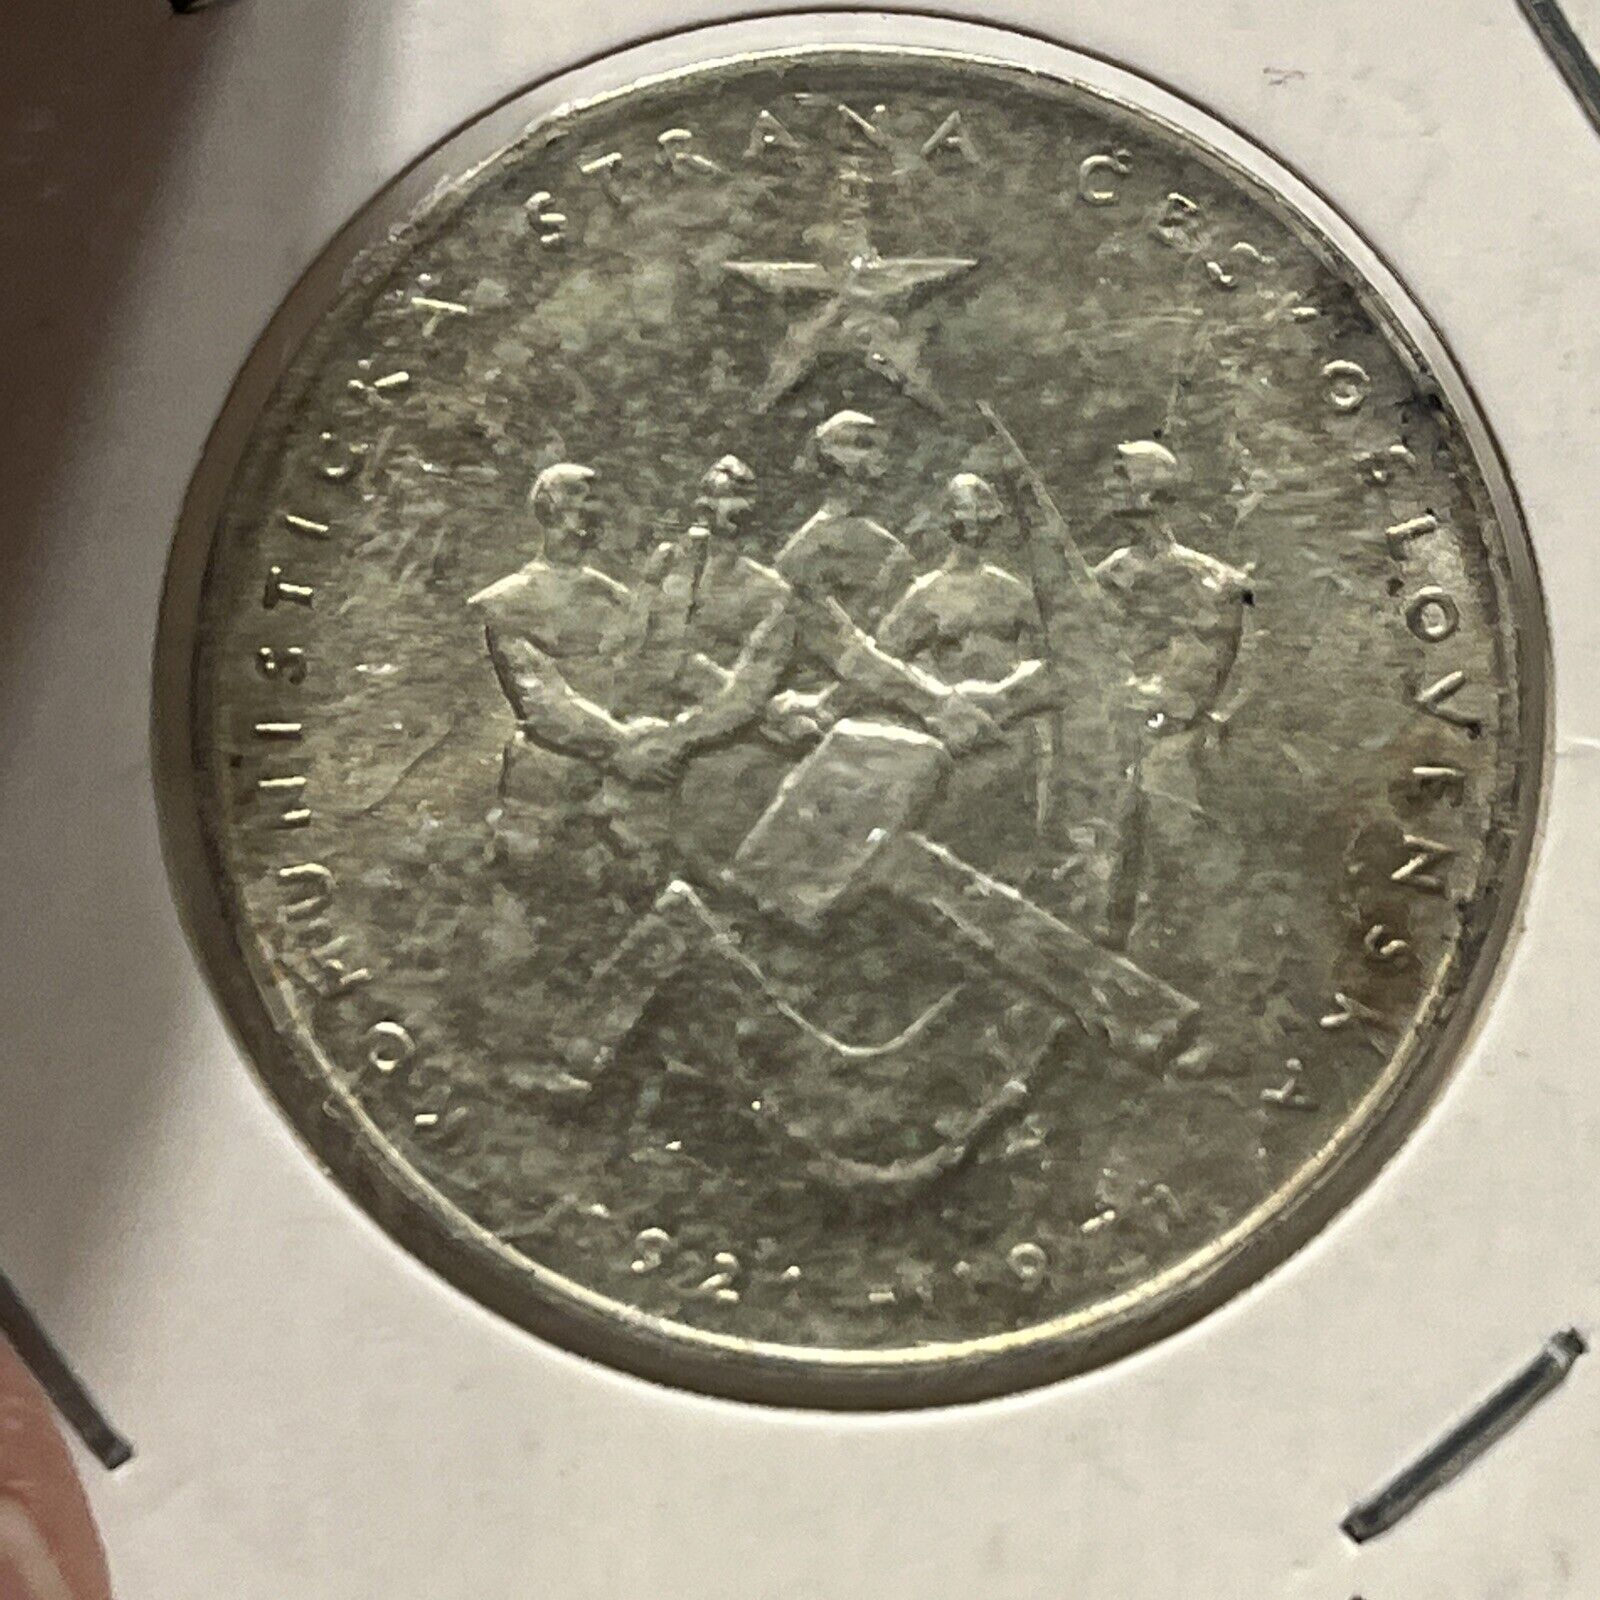 Czechoslovakia 50 Korun 1971 Brilliant Uncirculated Silver Coin Communist Party